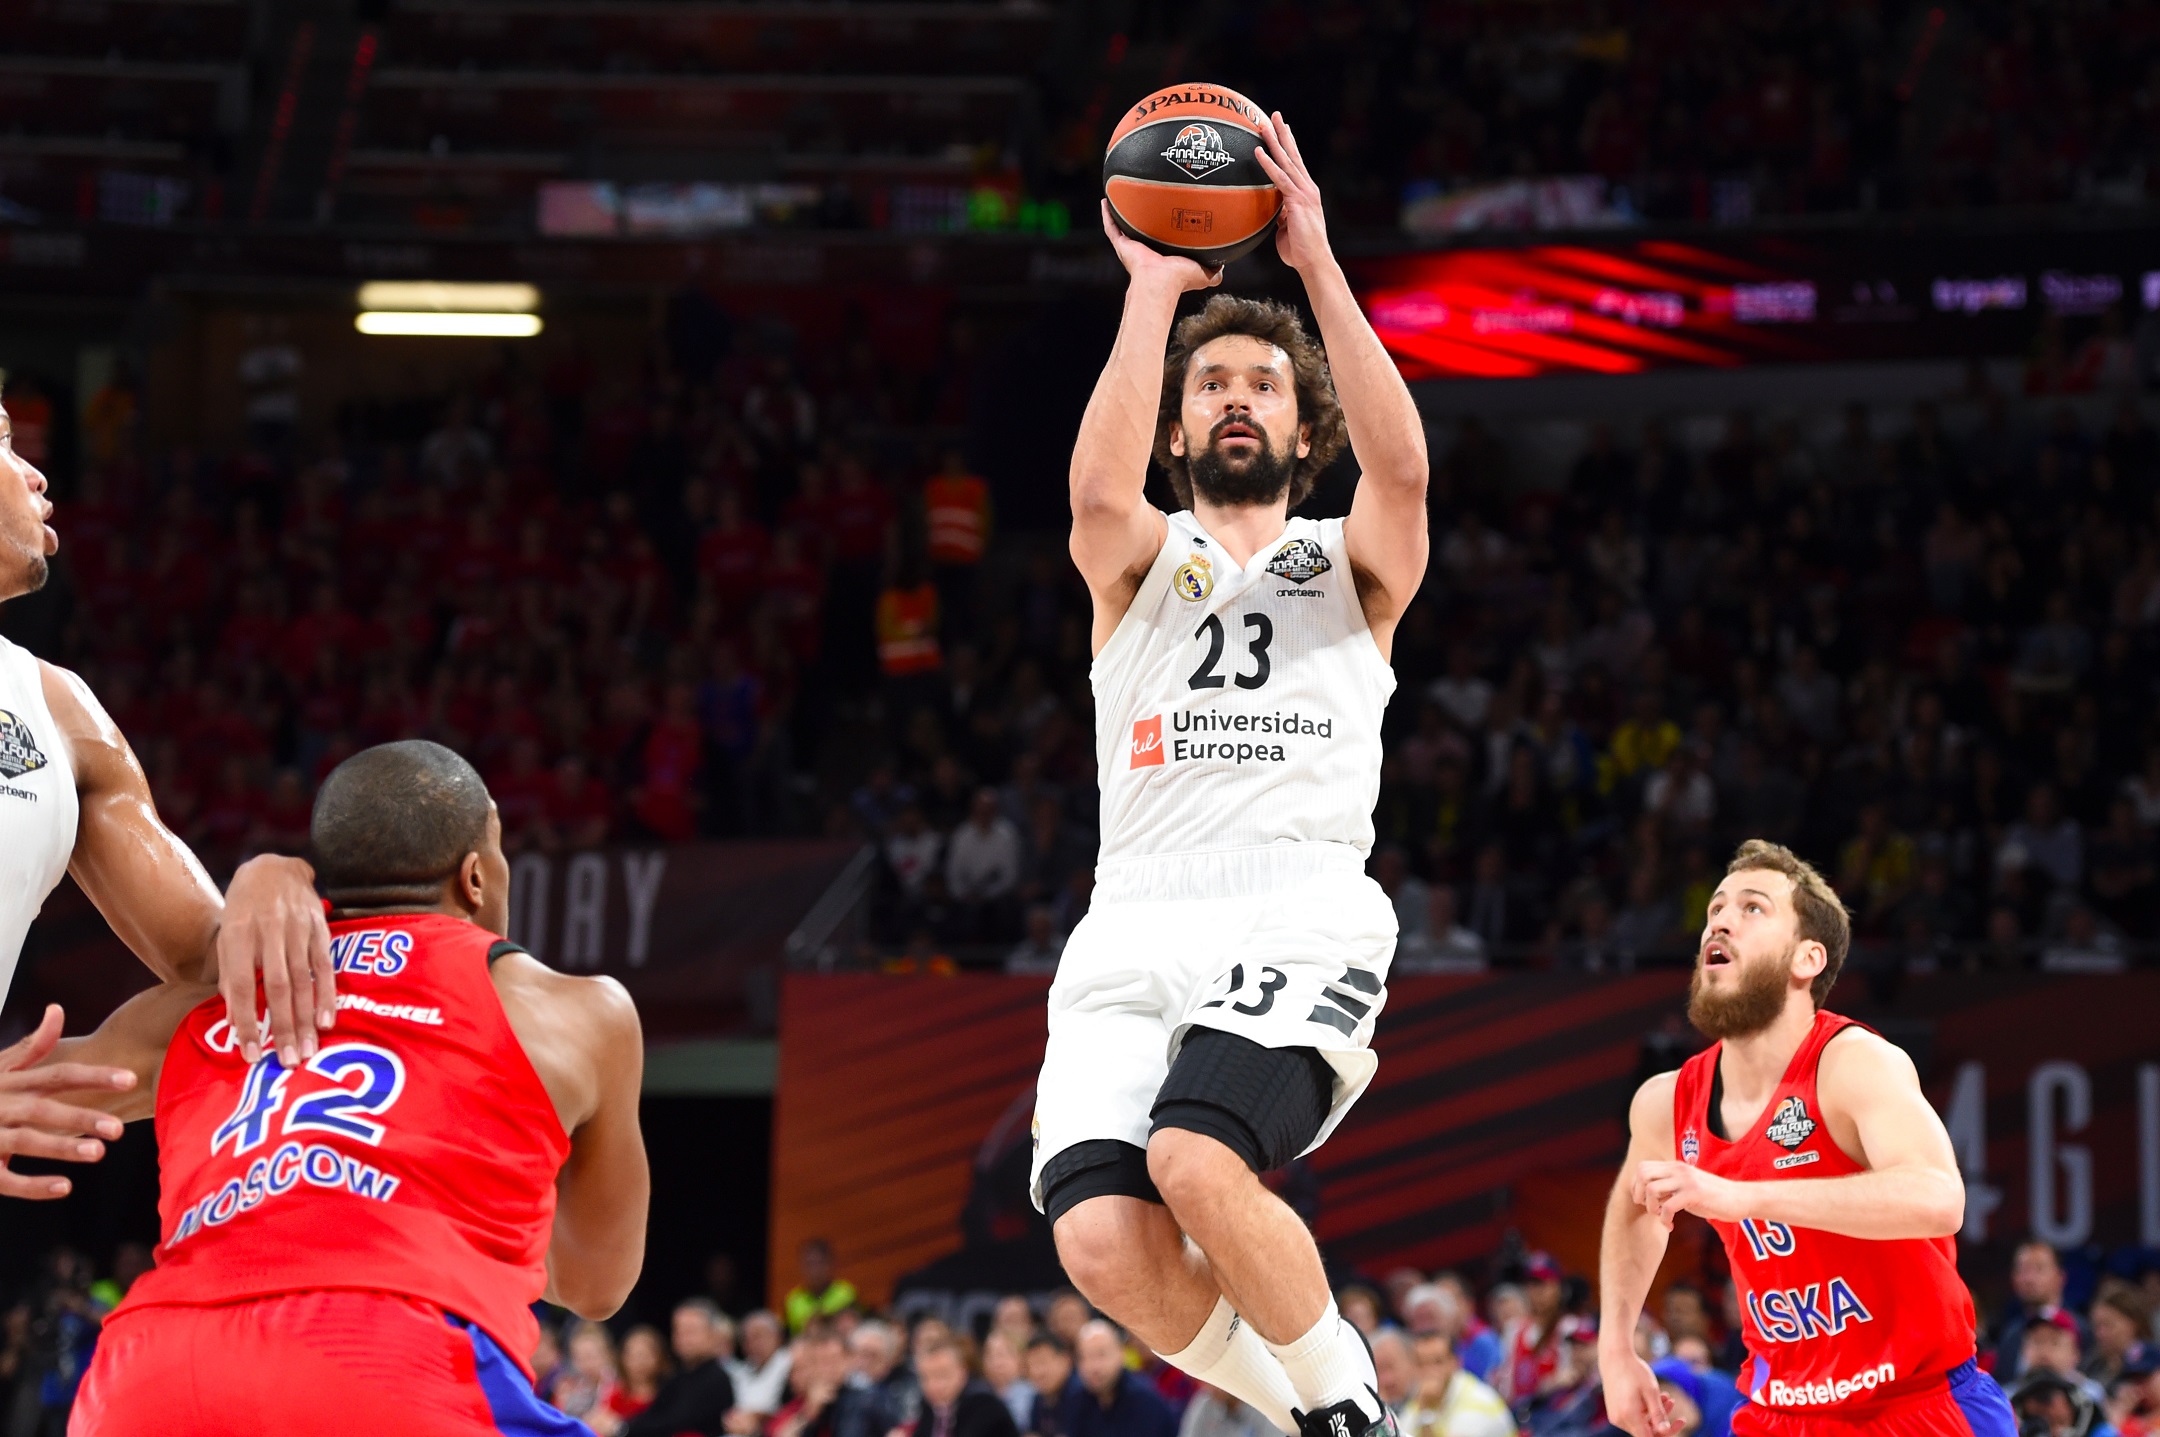 Euroleague Basketball’s great leaps forward SportBusiness